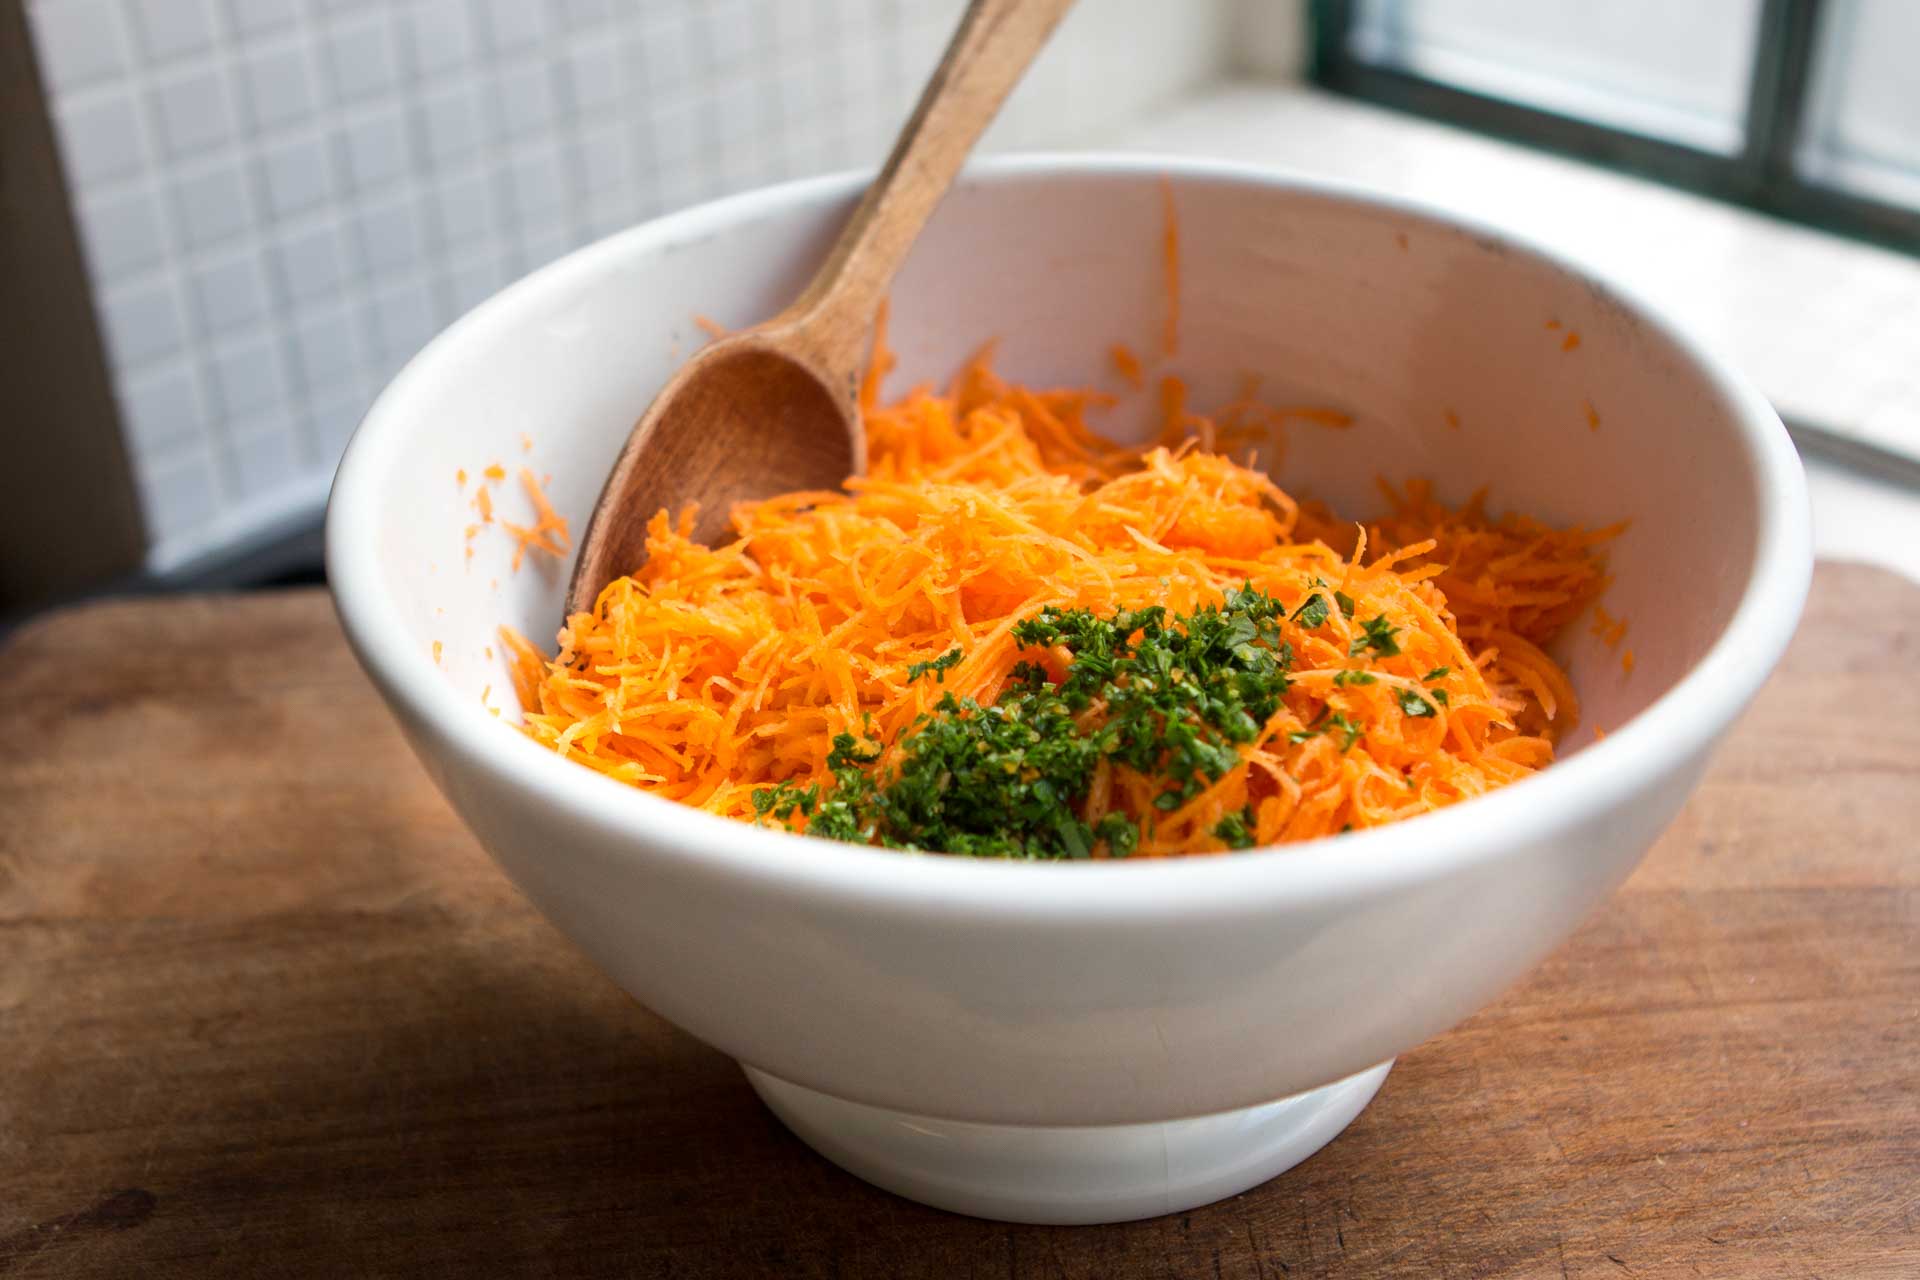 https://www.davidlebovitz.com/wp-content/uploads/2008/07/French-grated-carrot-salad-salade-carottes-rapee-recette-recipe-4.jpg